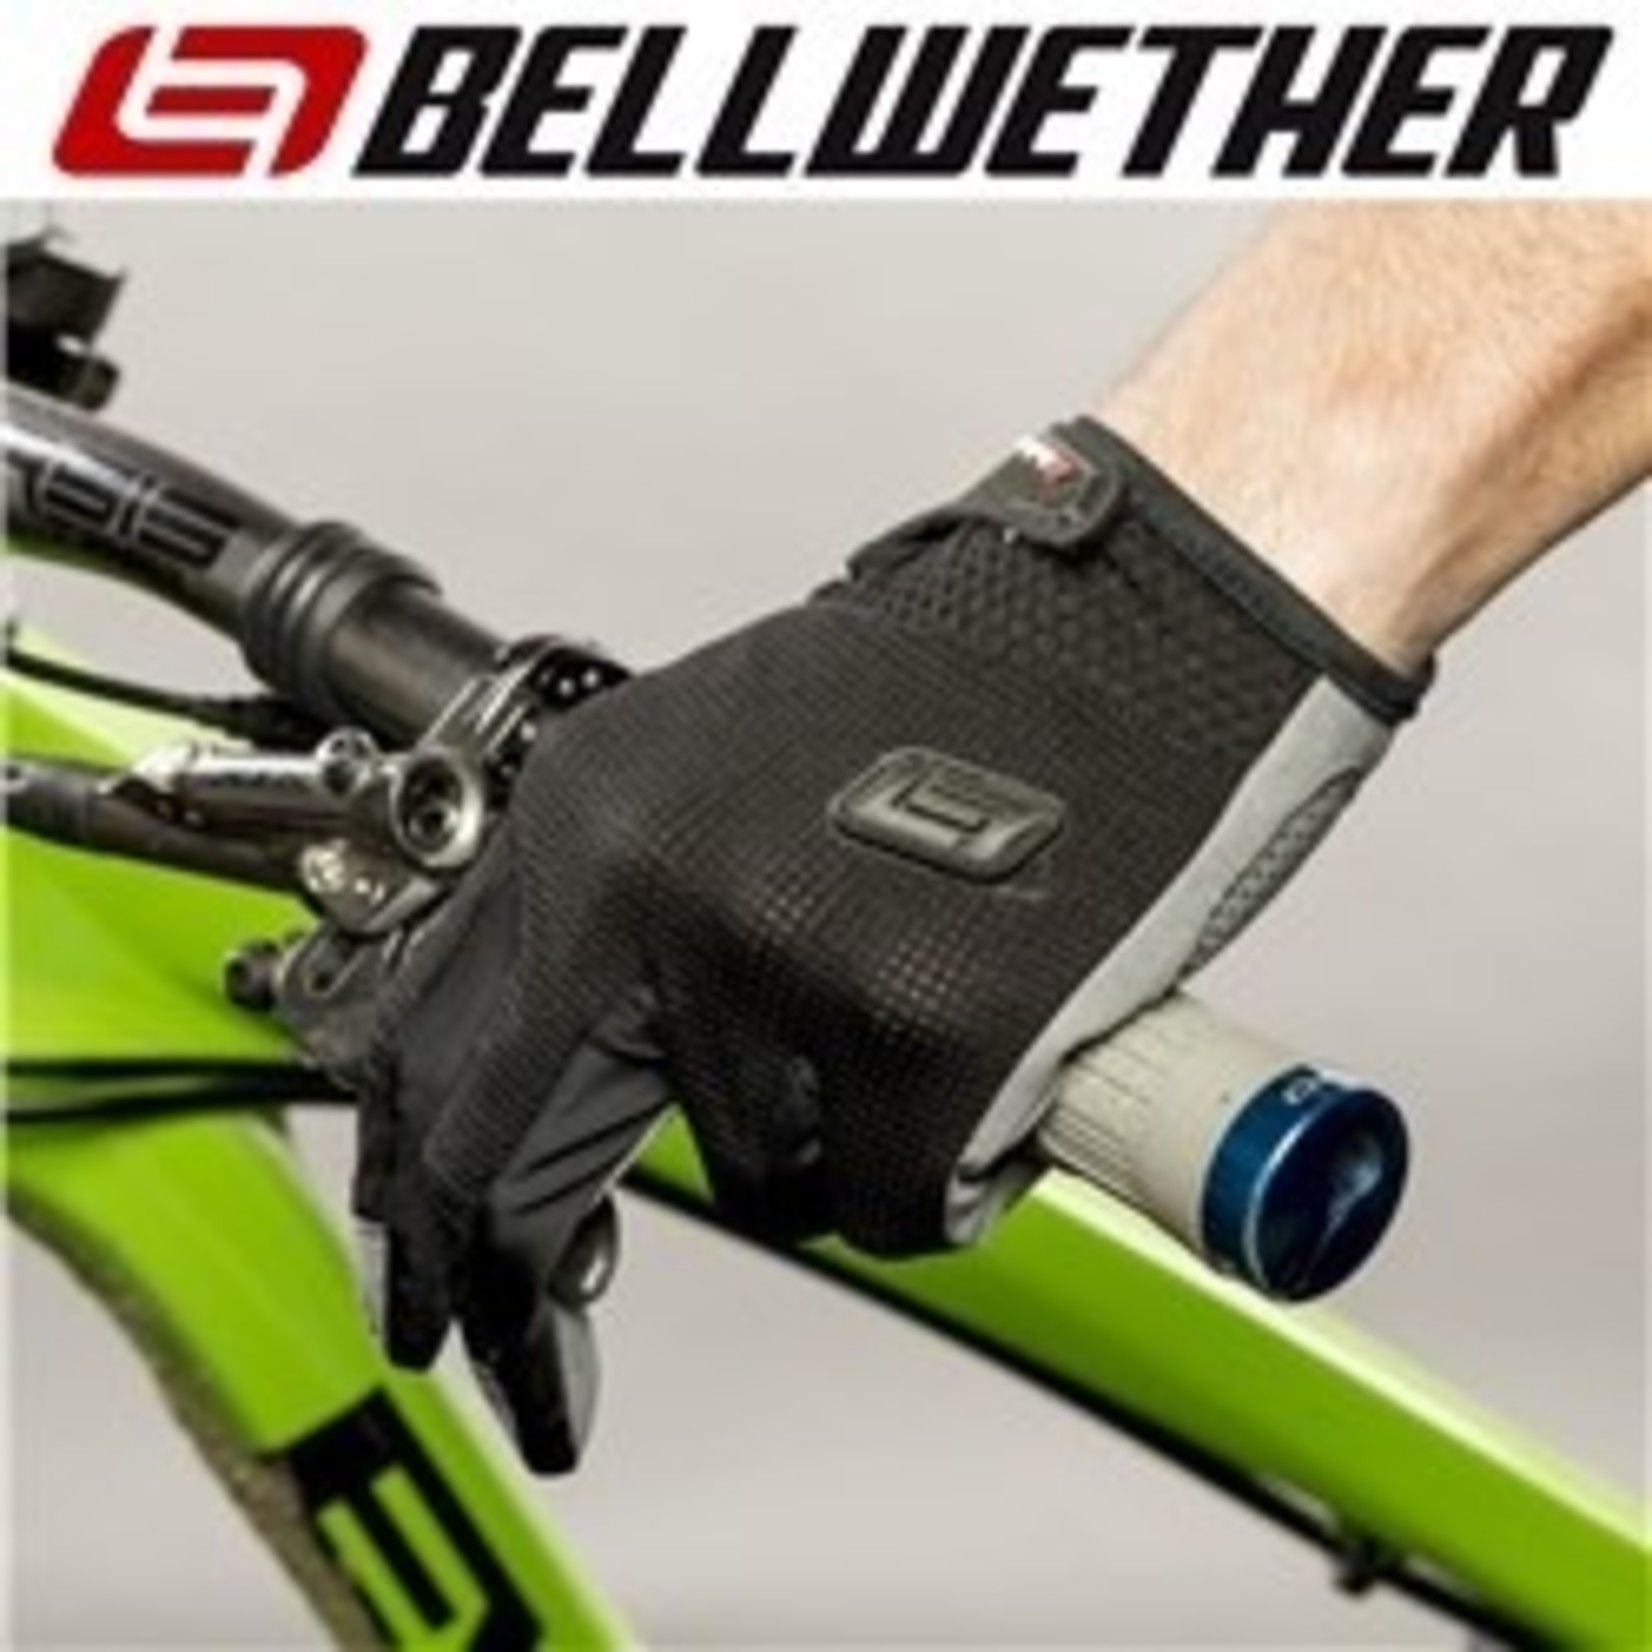 Bellwether Bellwether Cycling/Bike Gloves - Men's Direct Dial - Black